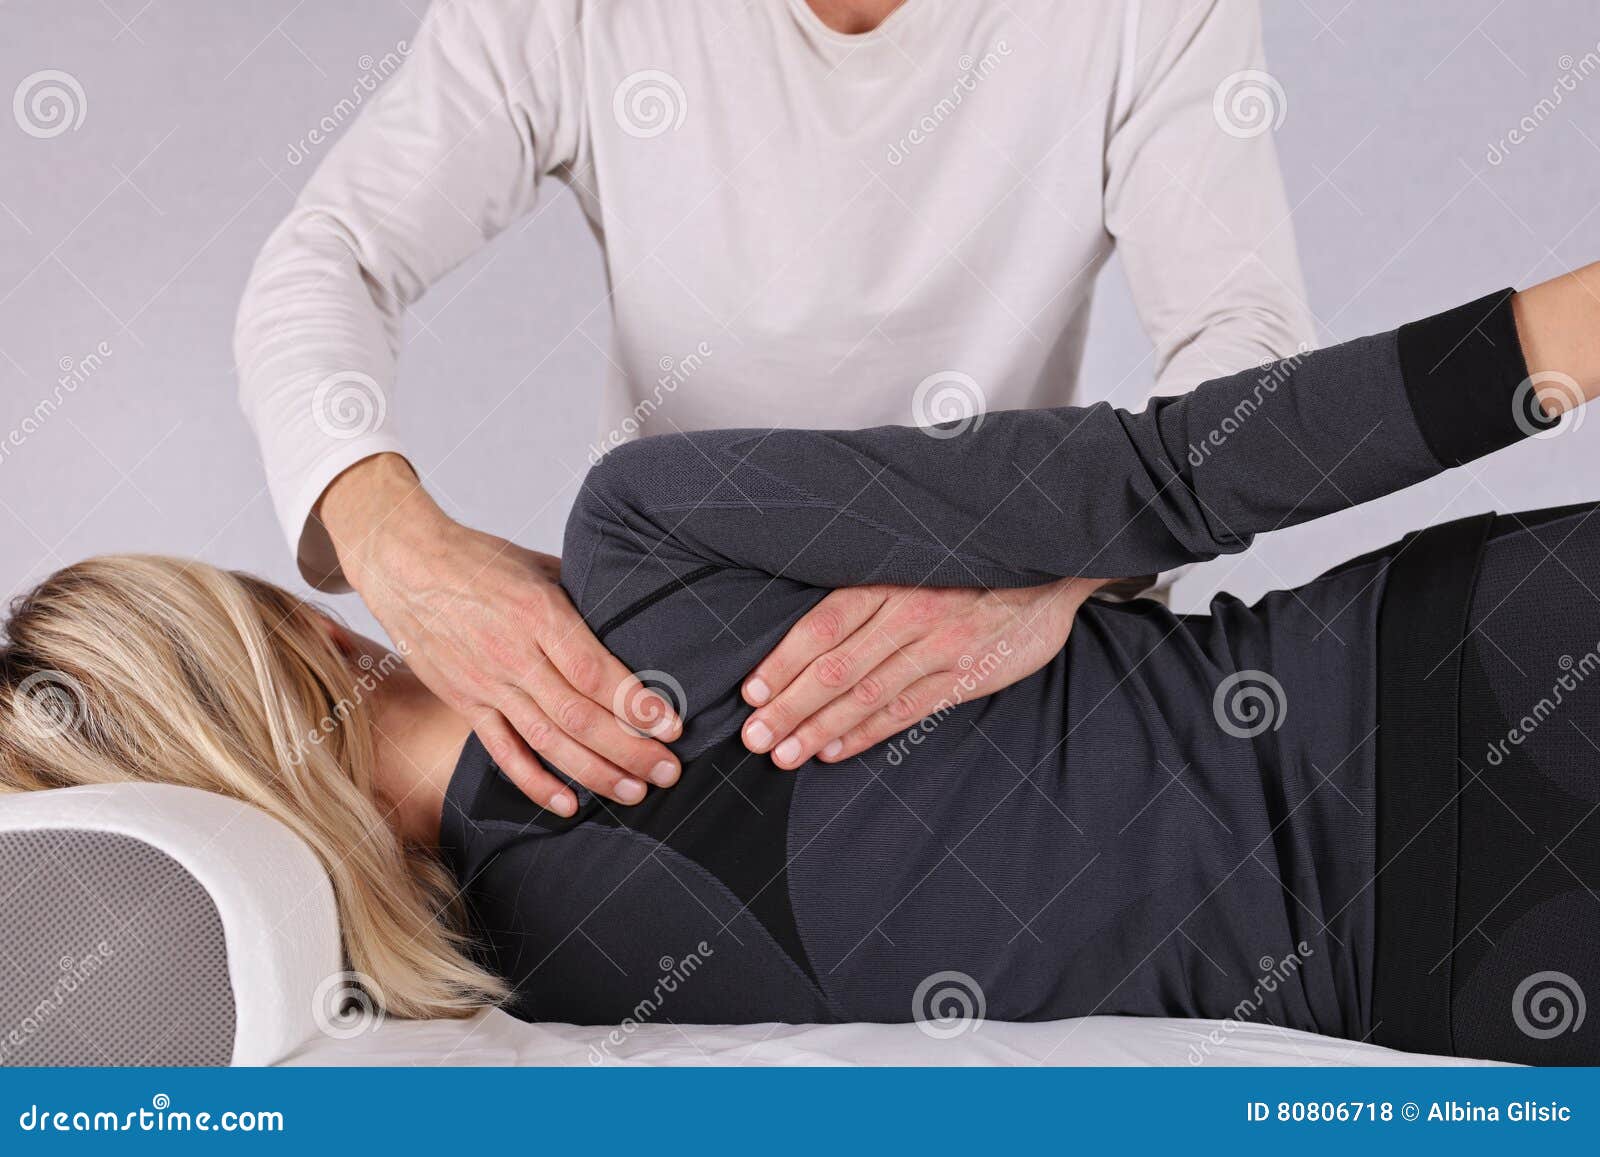 Woman having chiropractic back adjustment close up 